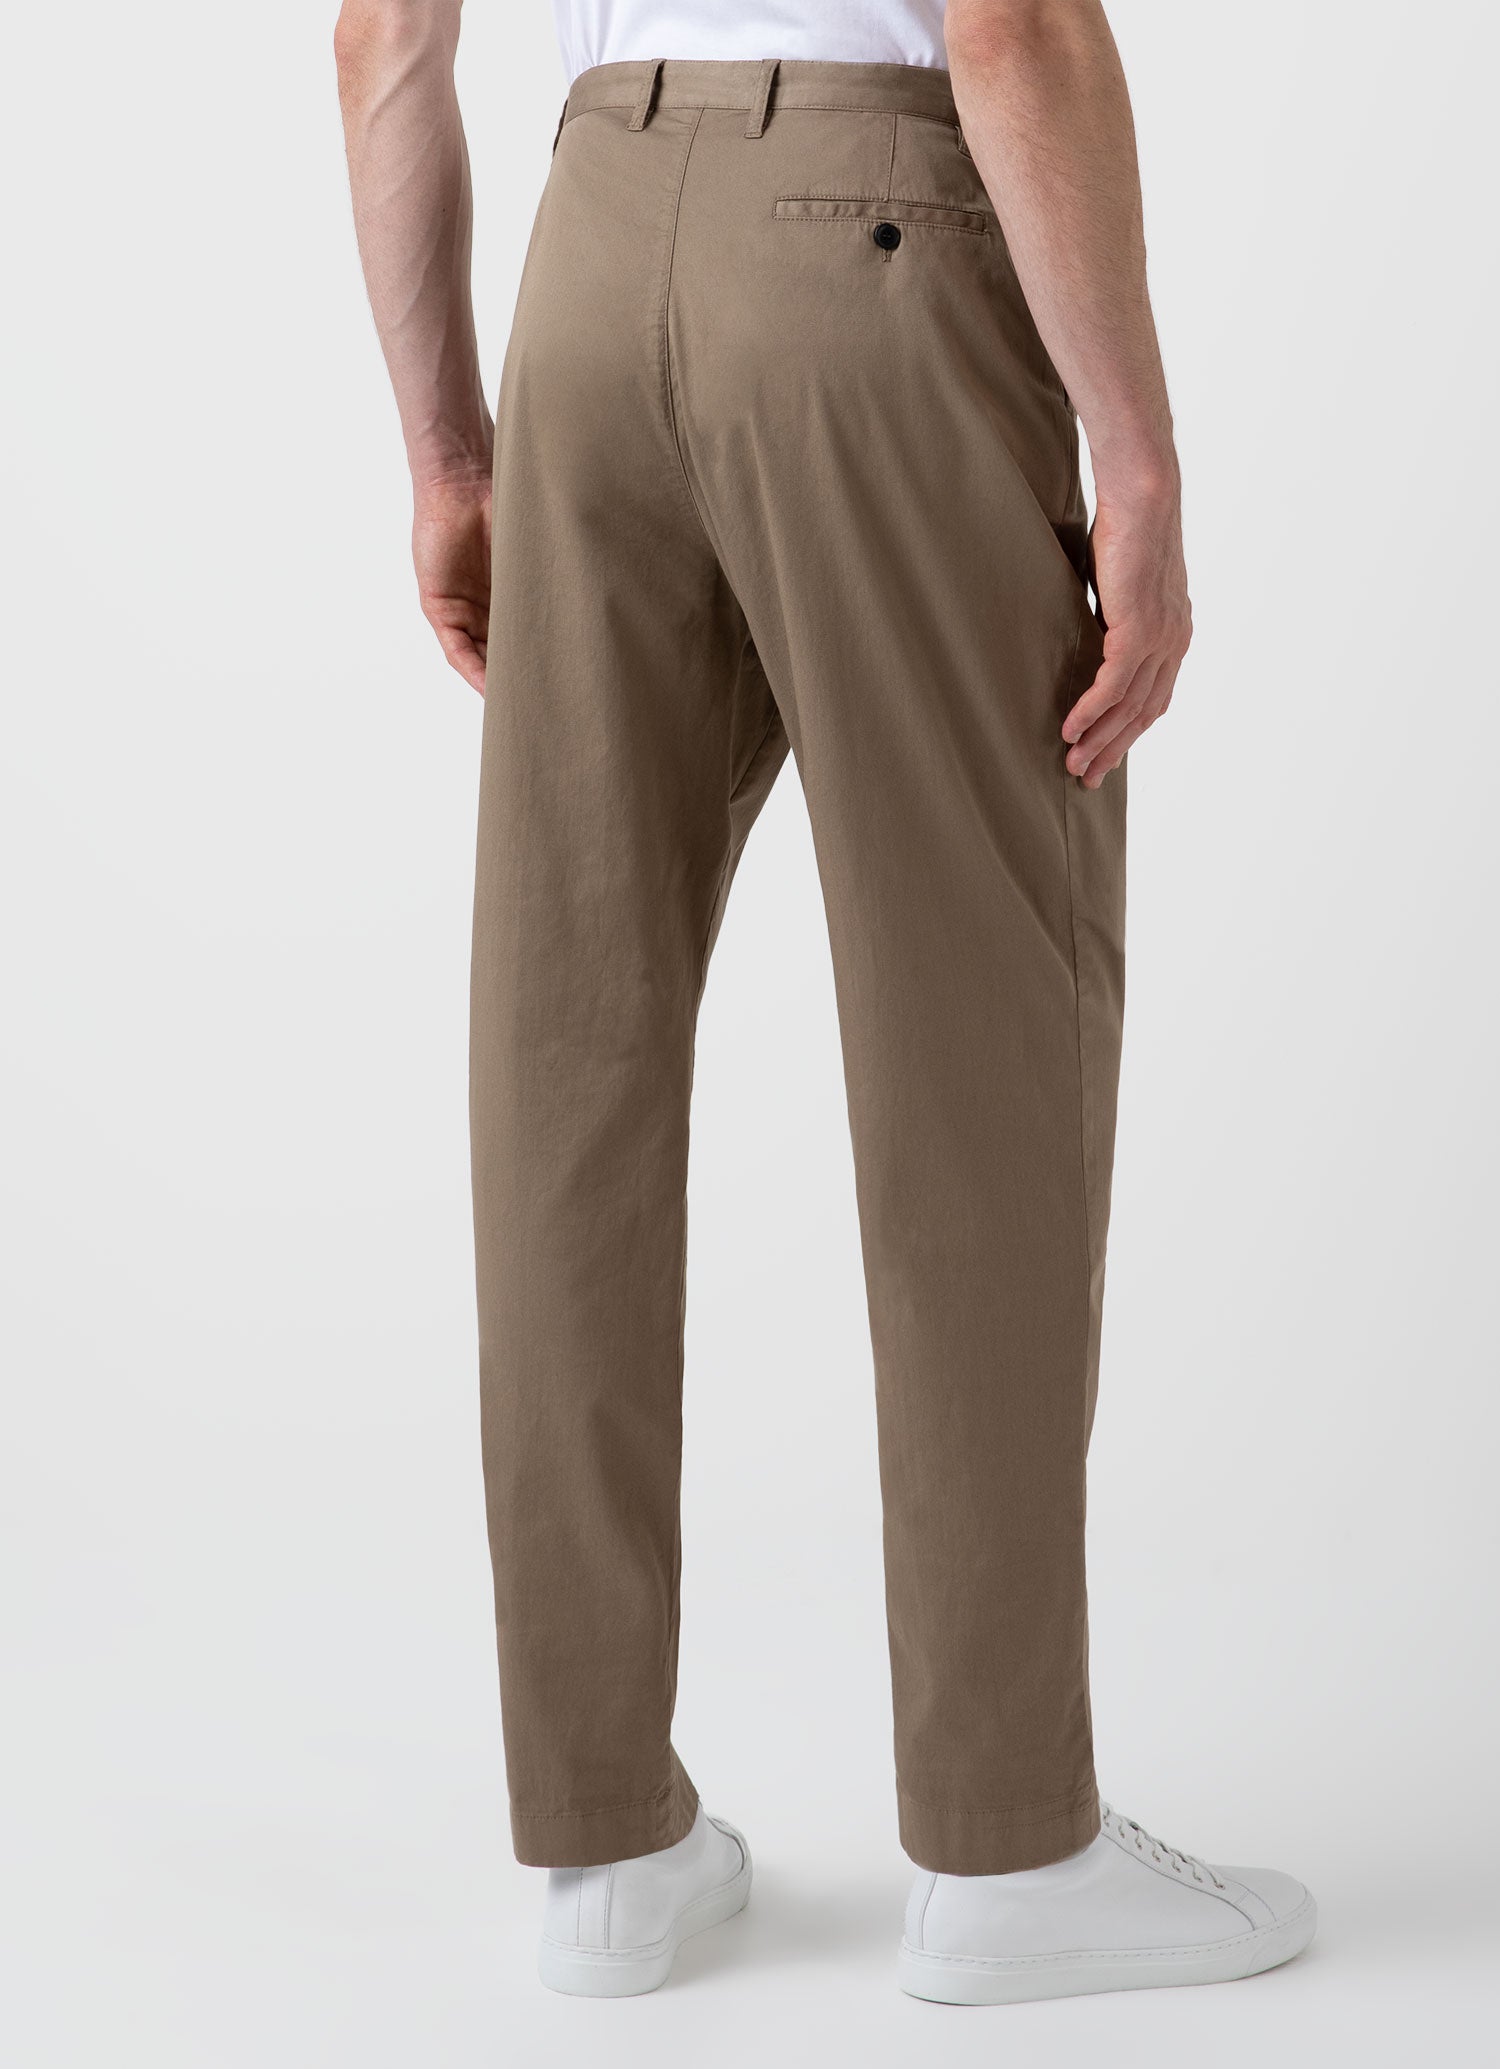 Buy Cream Trousers & Pants for Men by Truser Online | Ajio.com